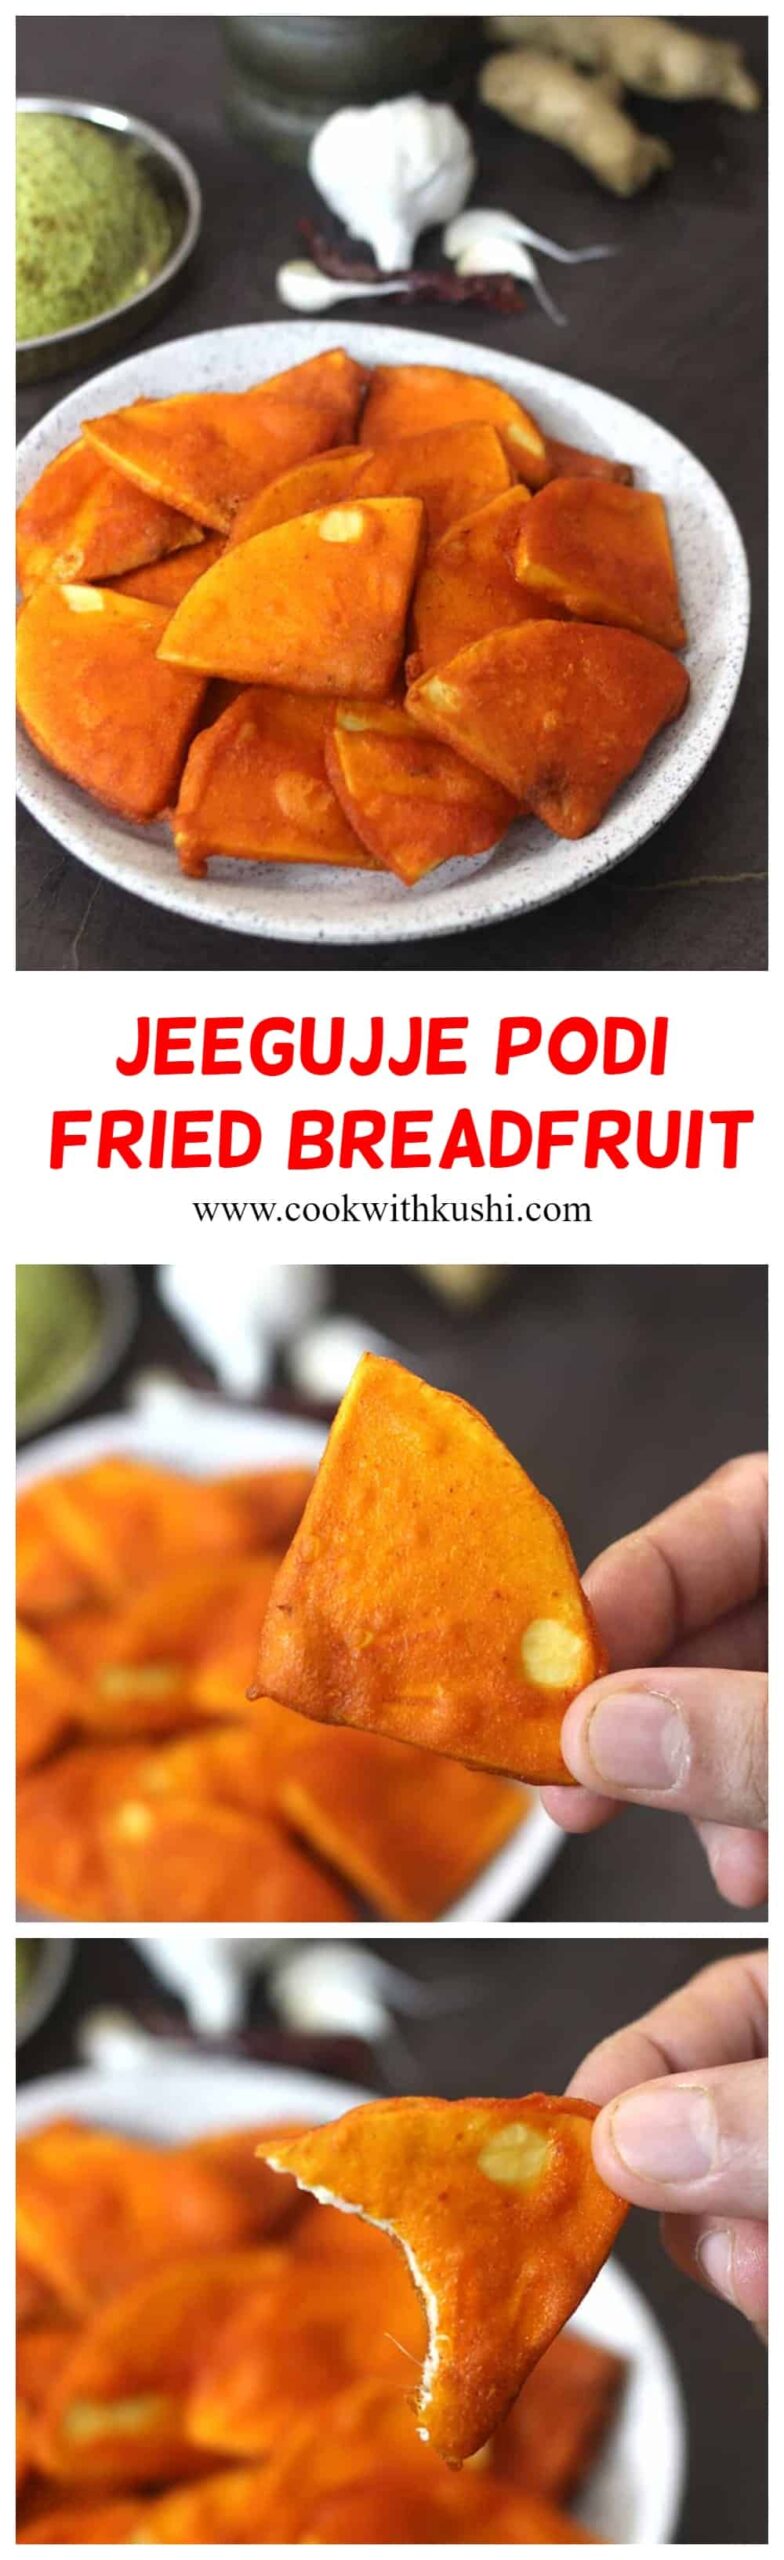 How to make fried breadfruit, jeevkadgi podi, jeegujje podi